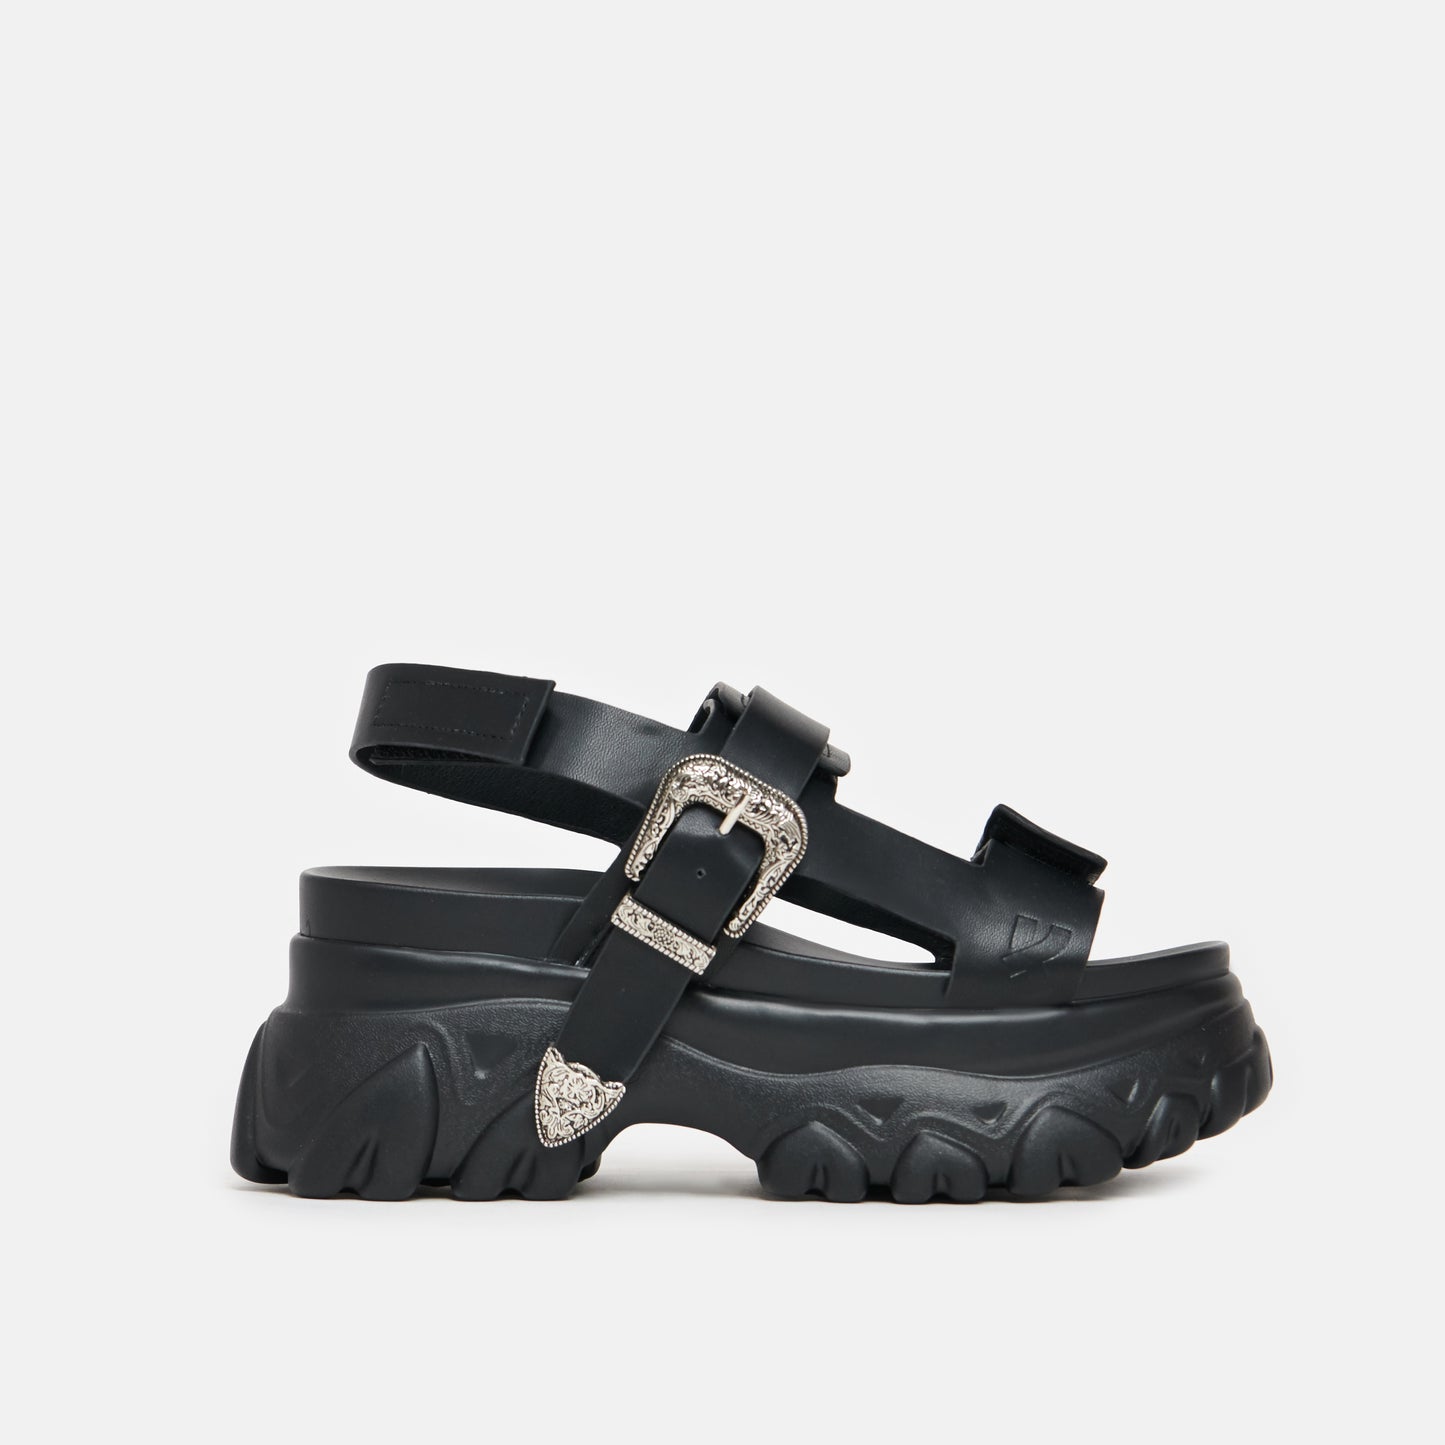 Iron Surveillance Chunky Sandals - Sandals - KOI Footwear - Black - Side View